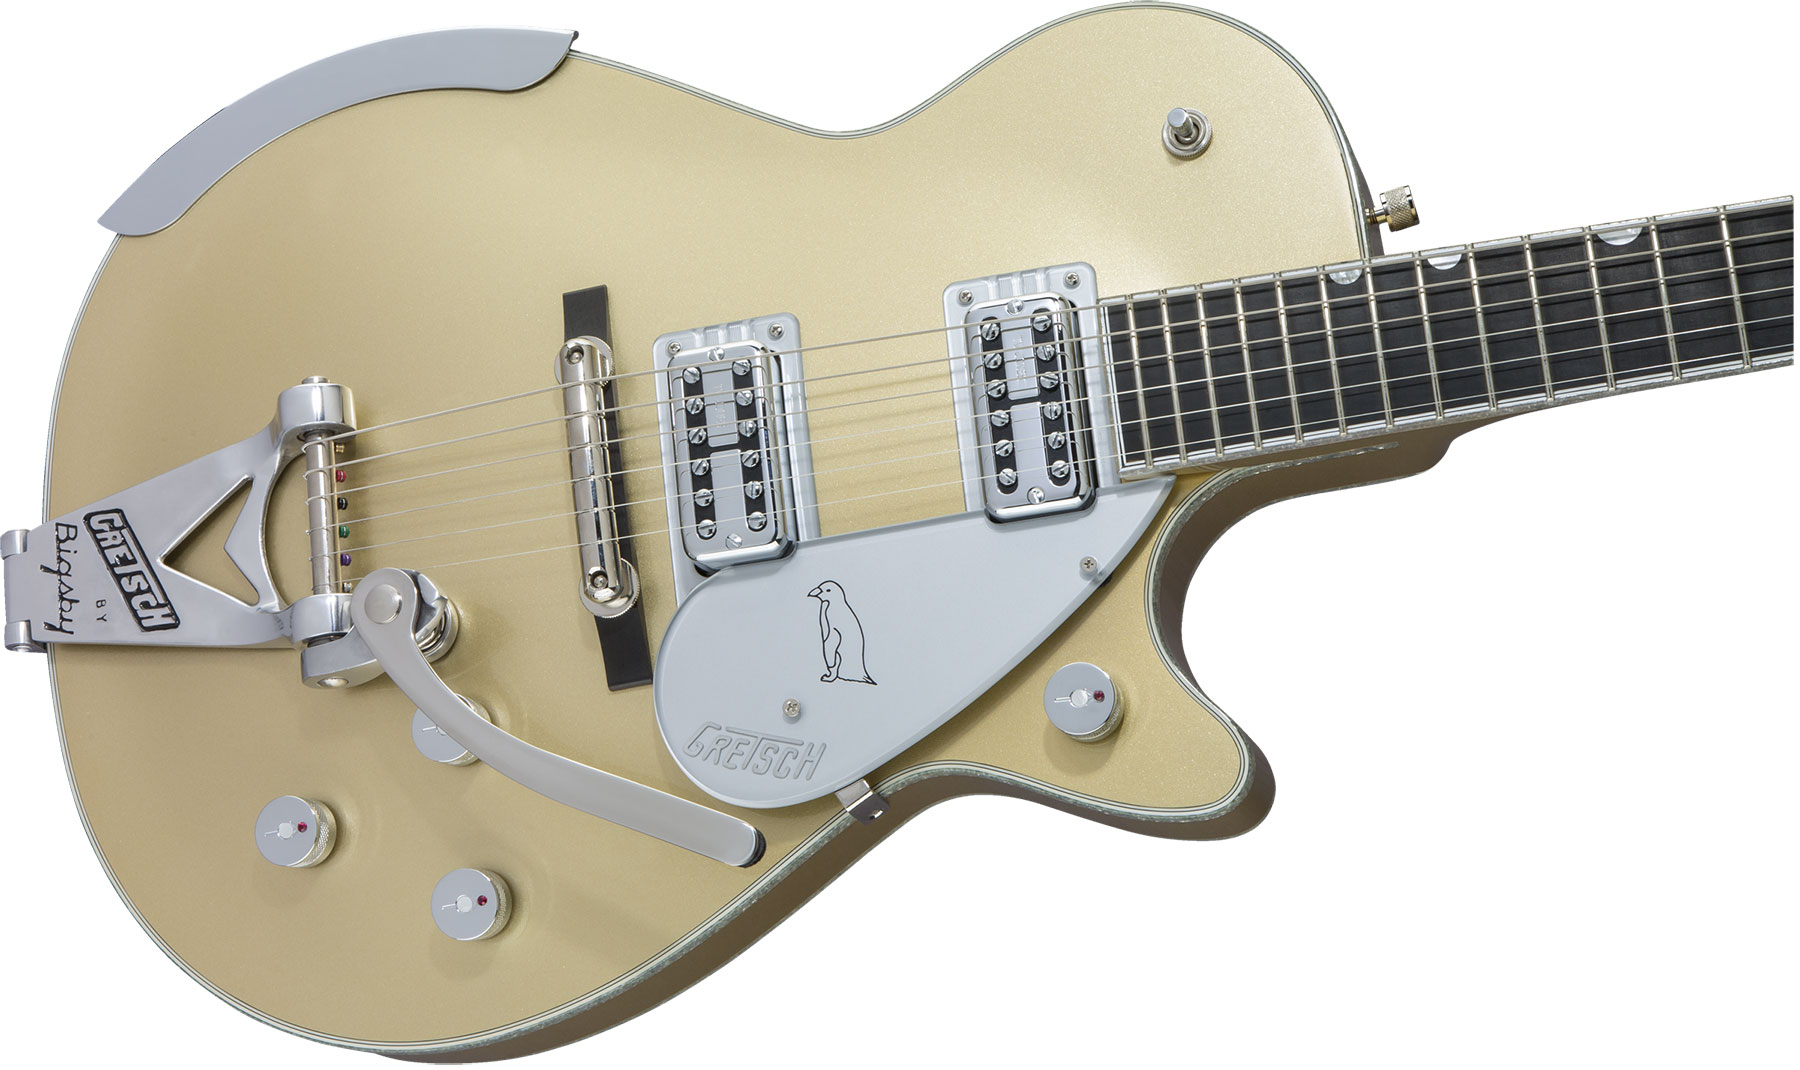 Gretsch G6134t Penguin Ltd Professional Japon Hh Trem Bigsby Eb - Casino Gold - Single cut electric guitar - Variation 2